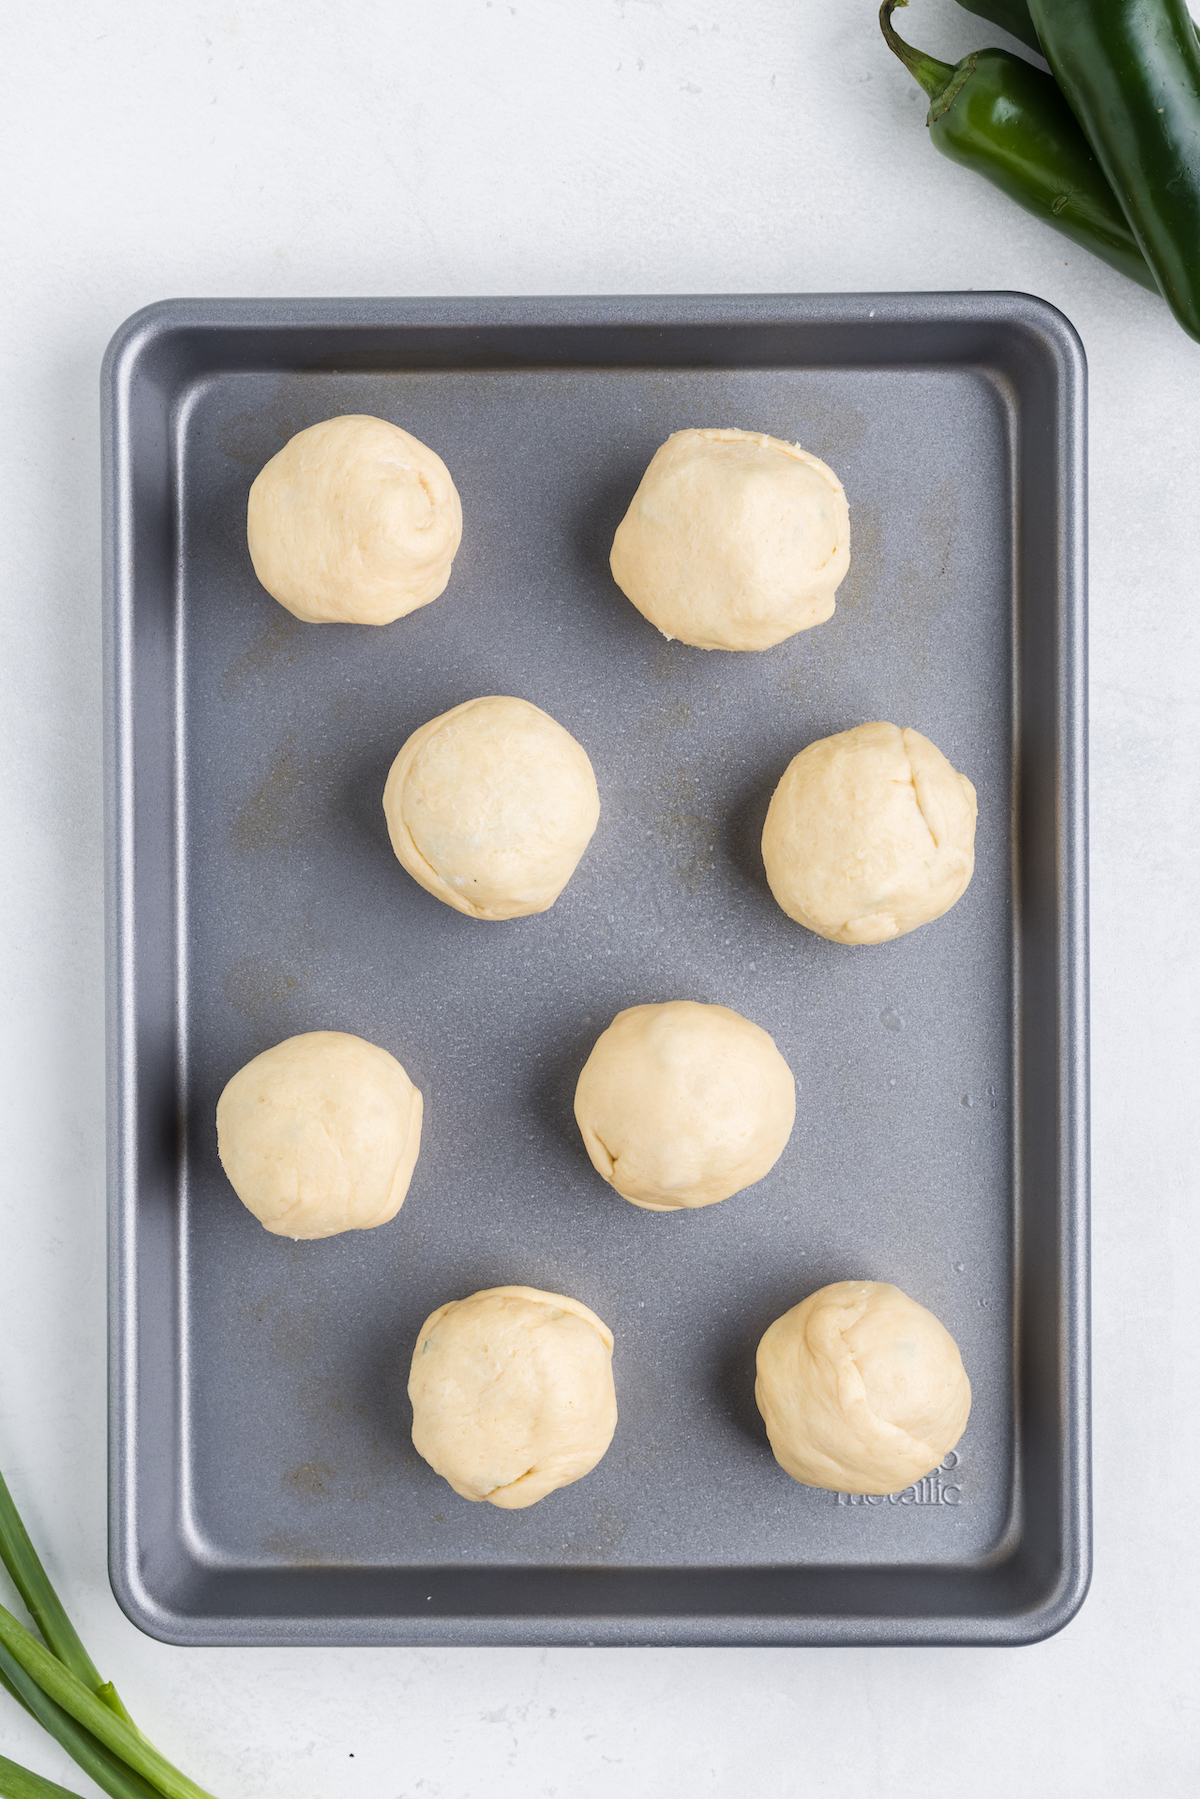 filled jalapeno rolls on a baking sheet